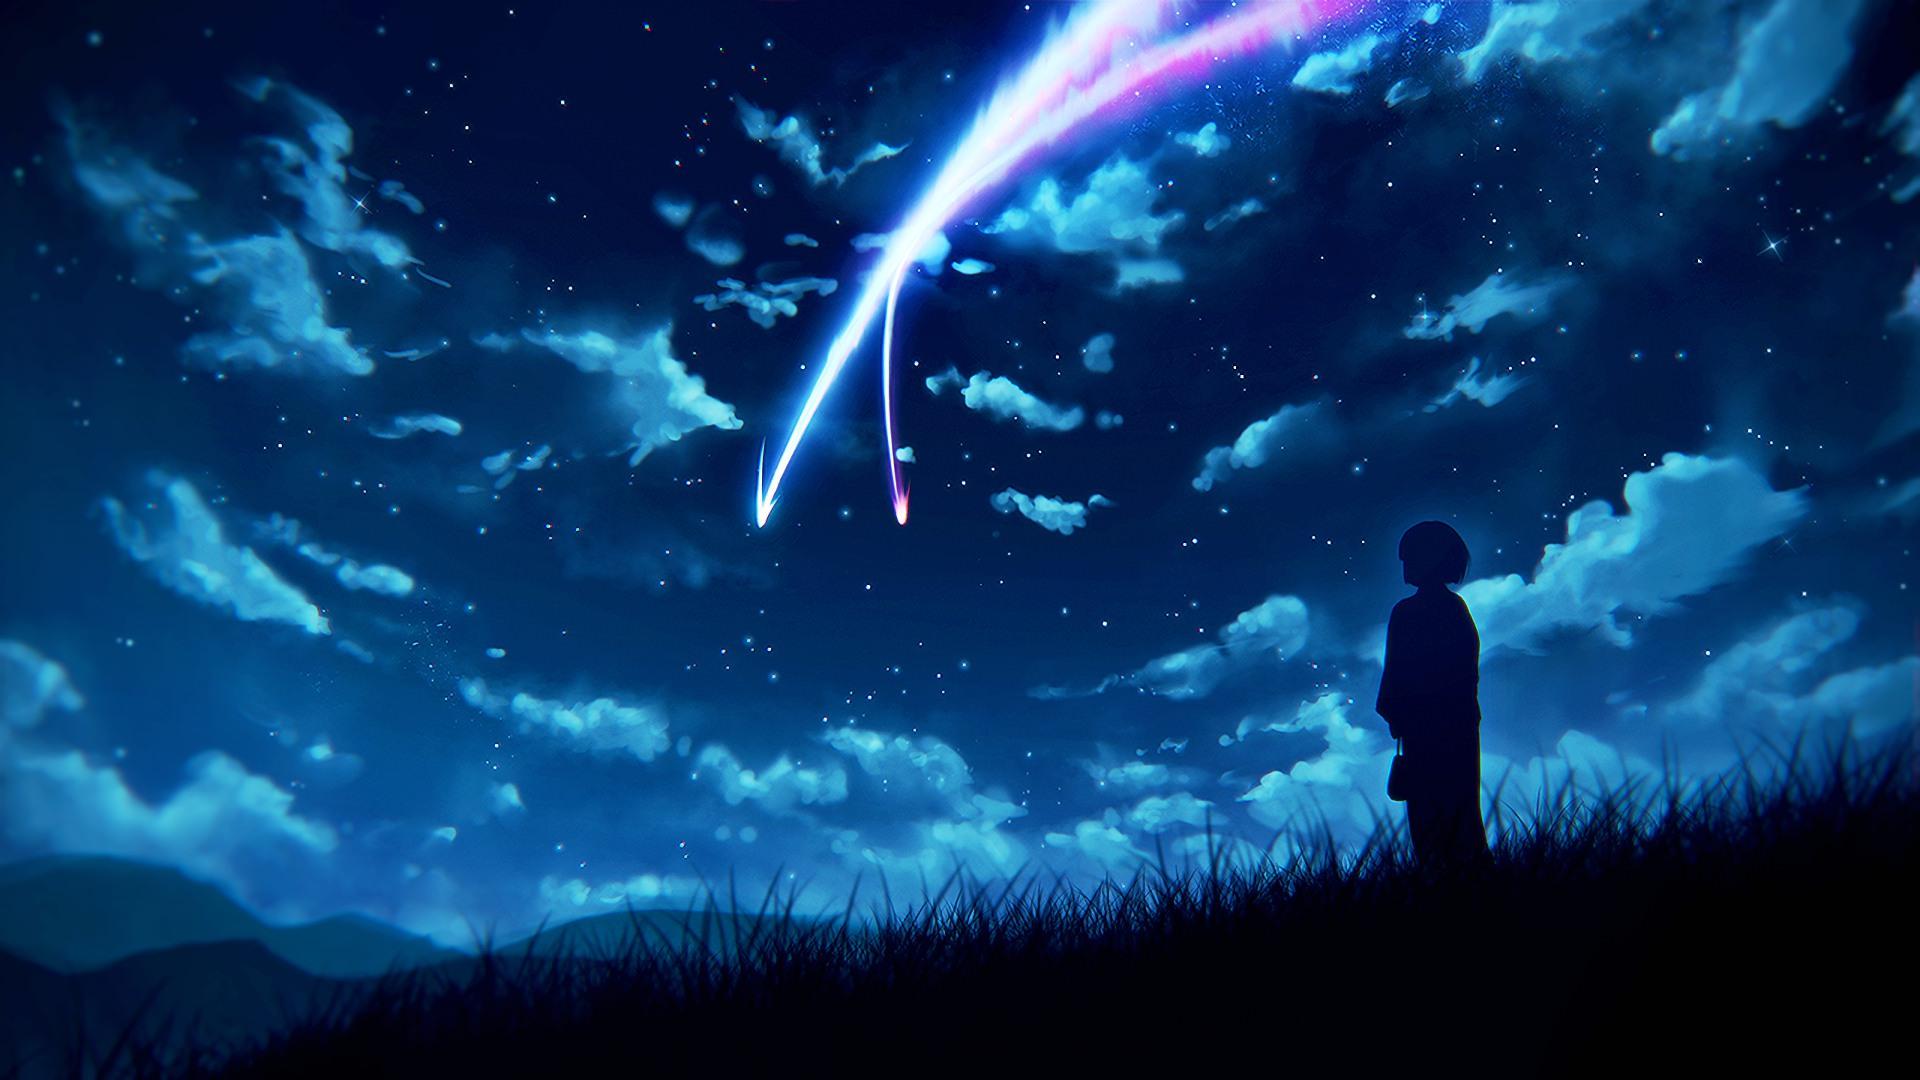 Anime Night Sky Wallpaper Flash Sales, GET 56% OFF, 